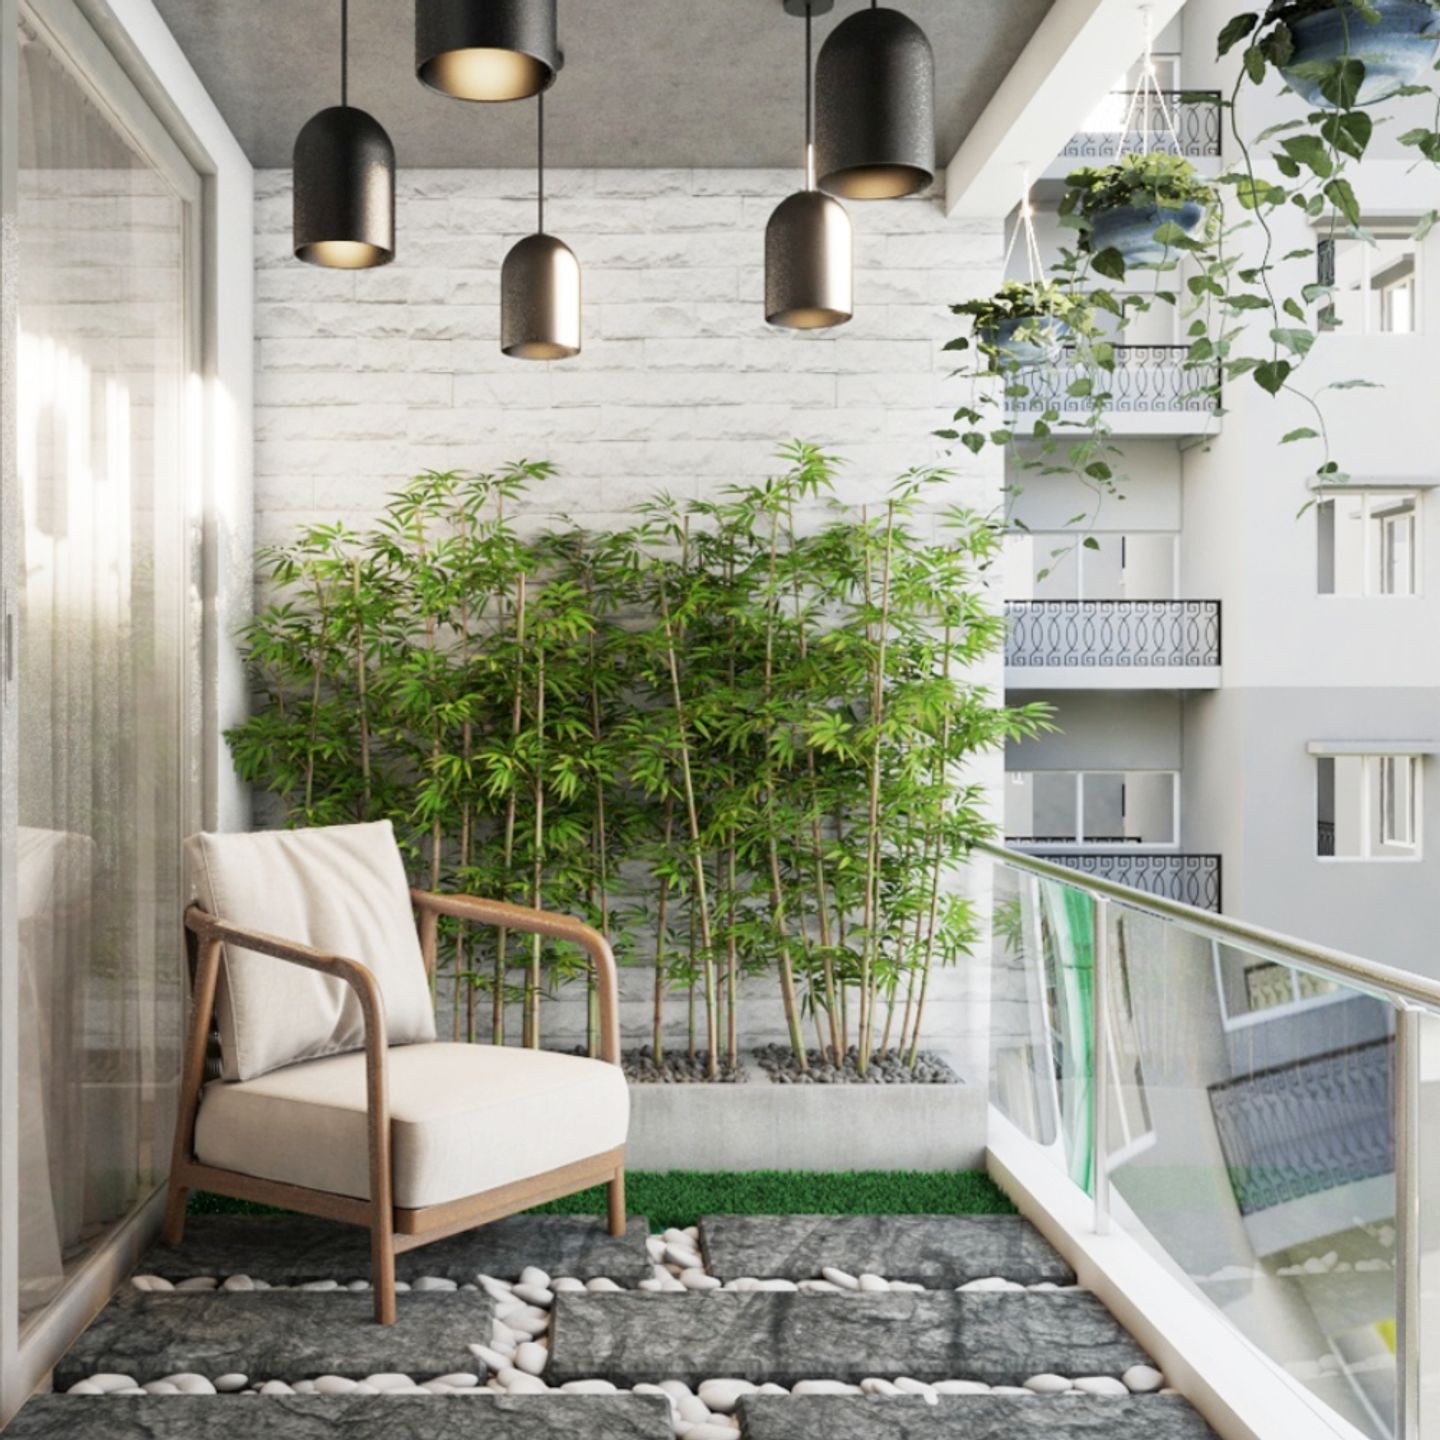 Balcony Design With White Brick Accent Wall - Livspace